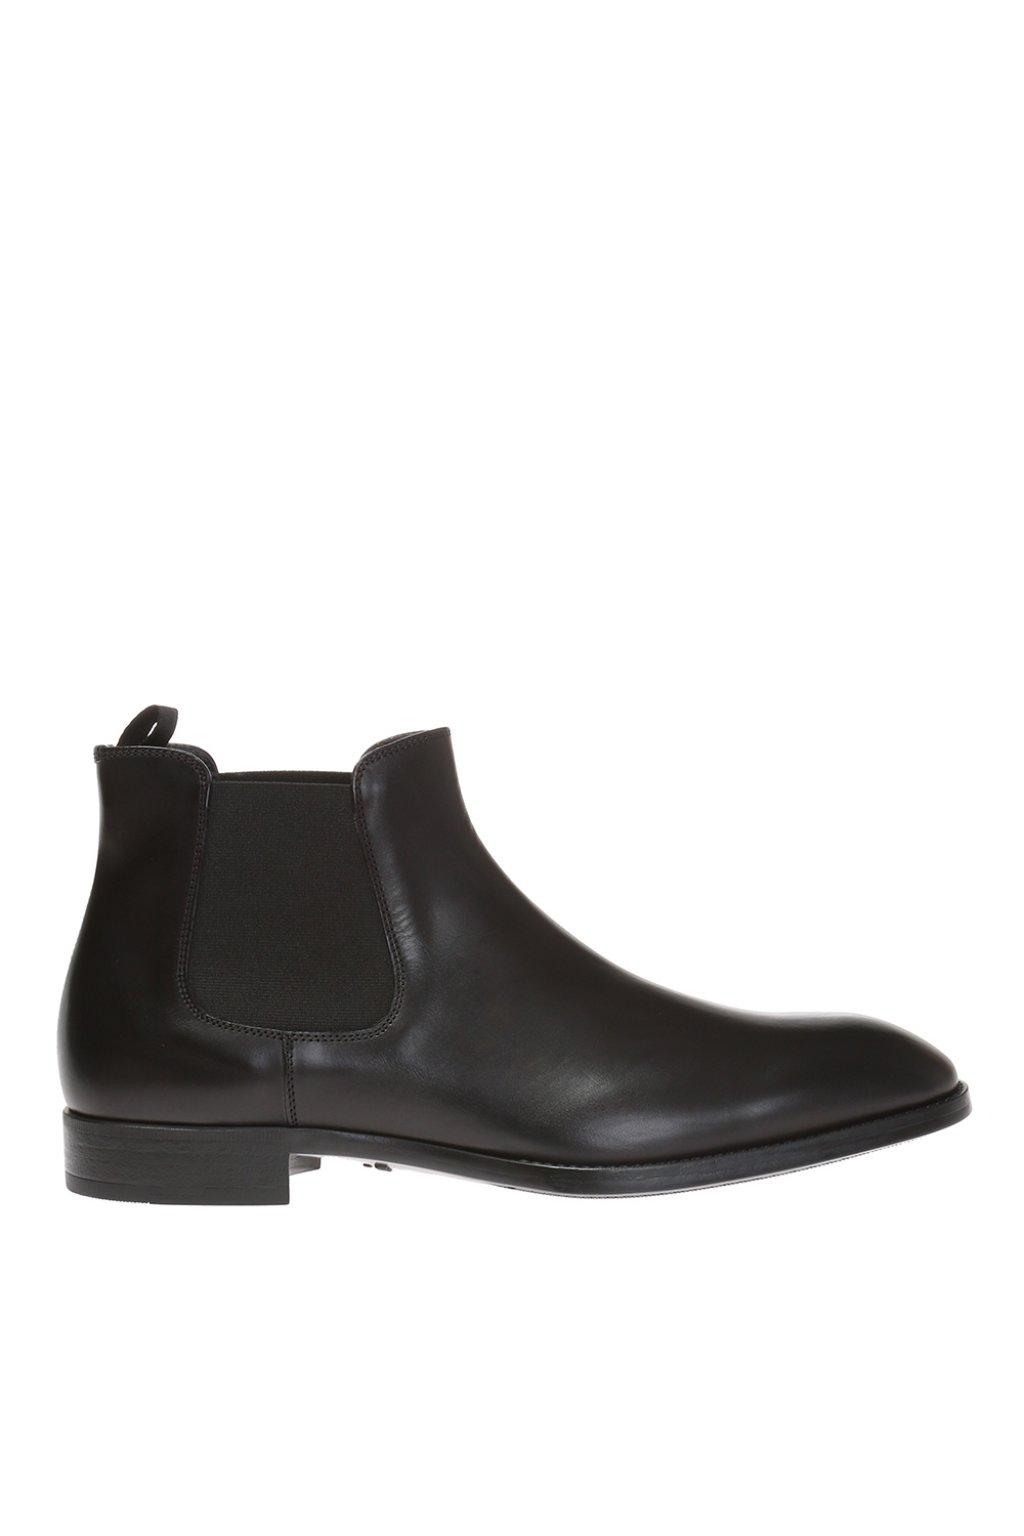 Giorgio Armani Leather Chelsea Boots in Black for Men - Lyst